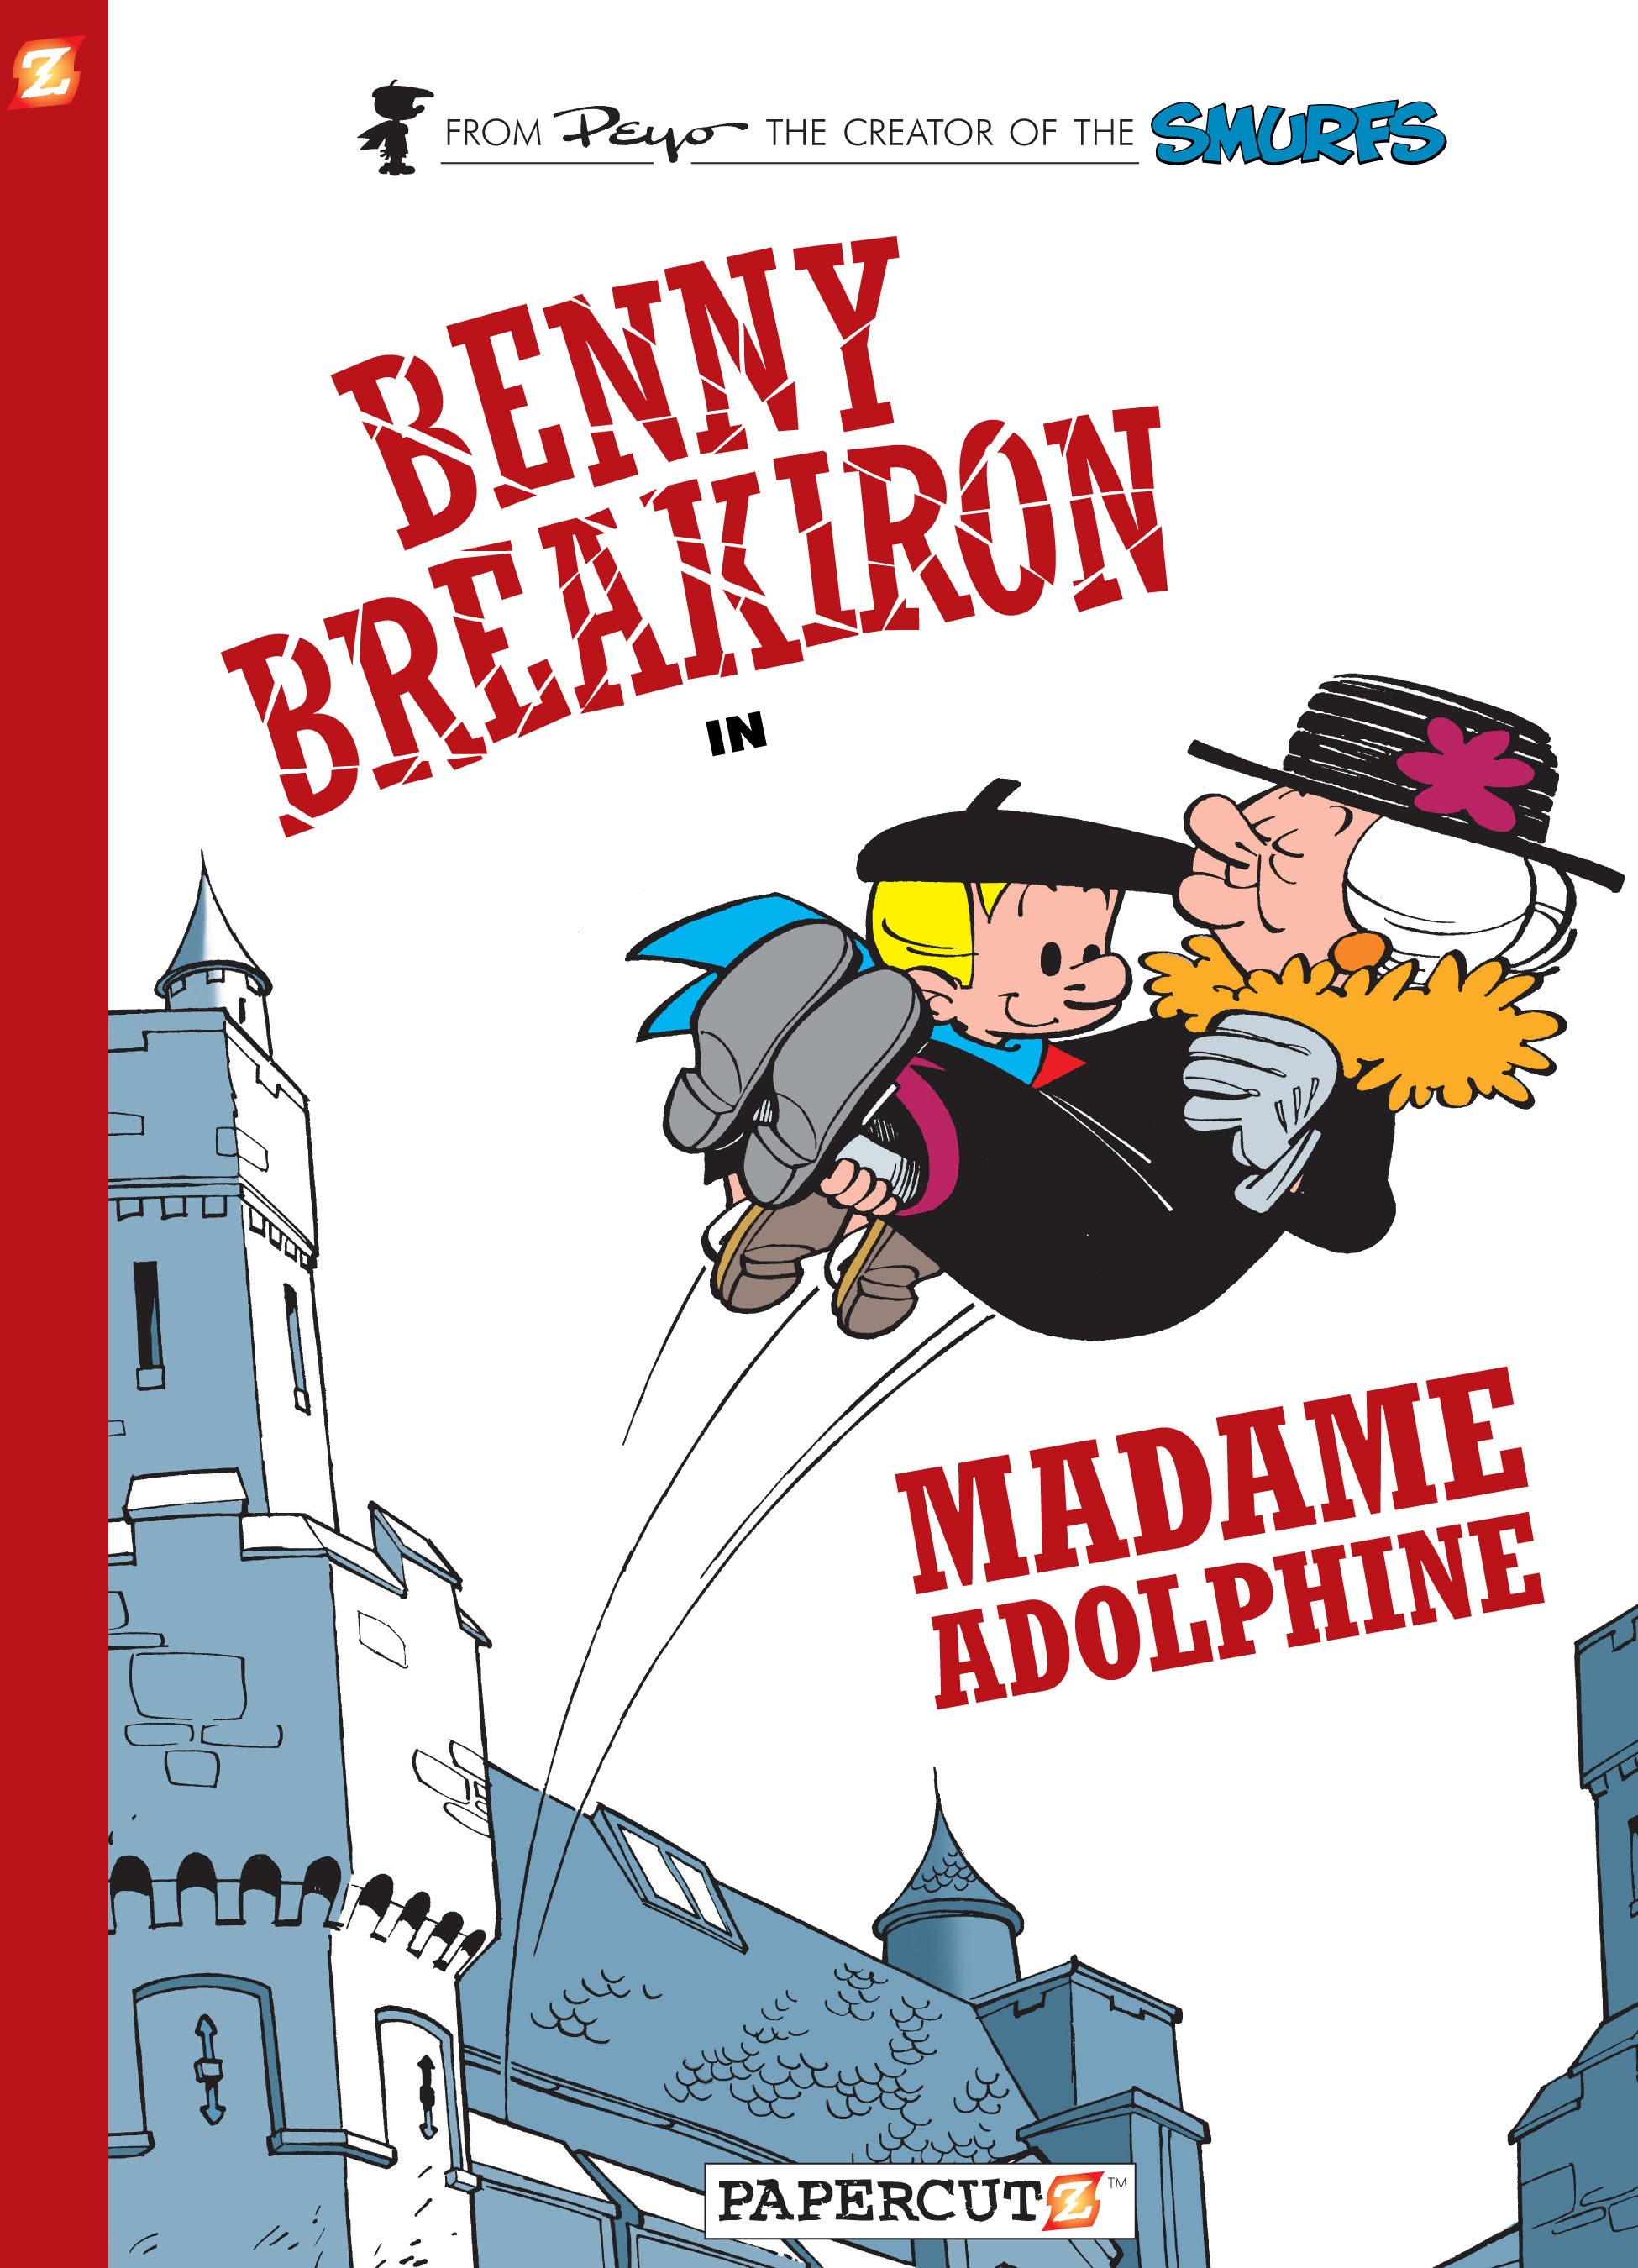 Read online Benny Breakiron comic -  Issue #2 - 1